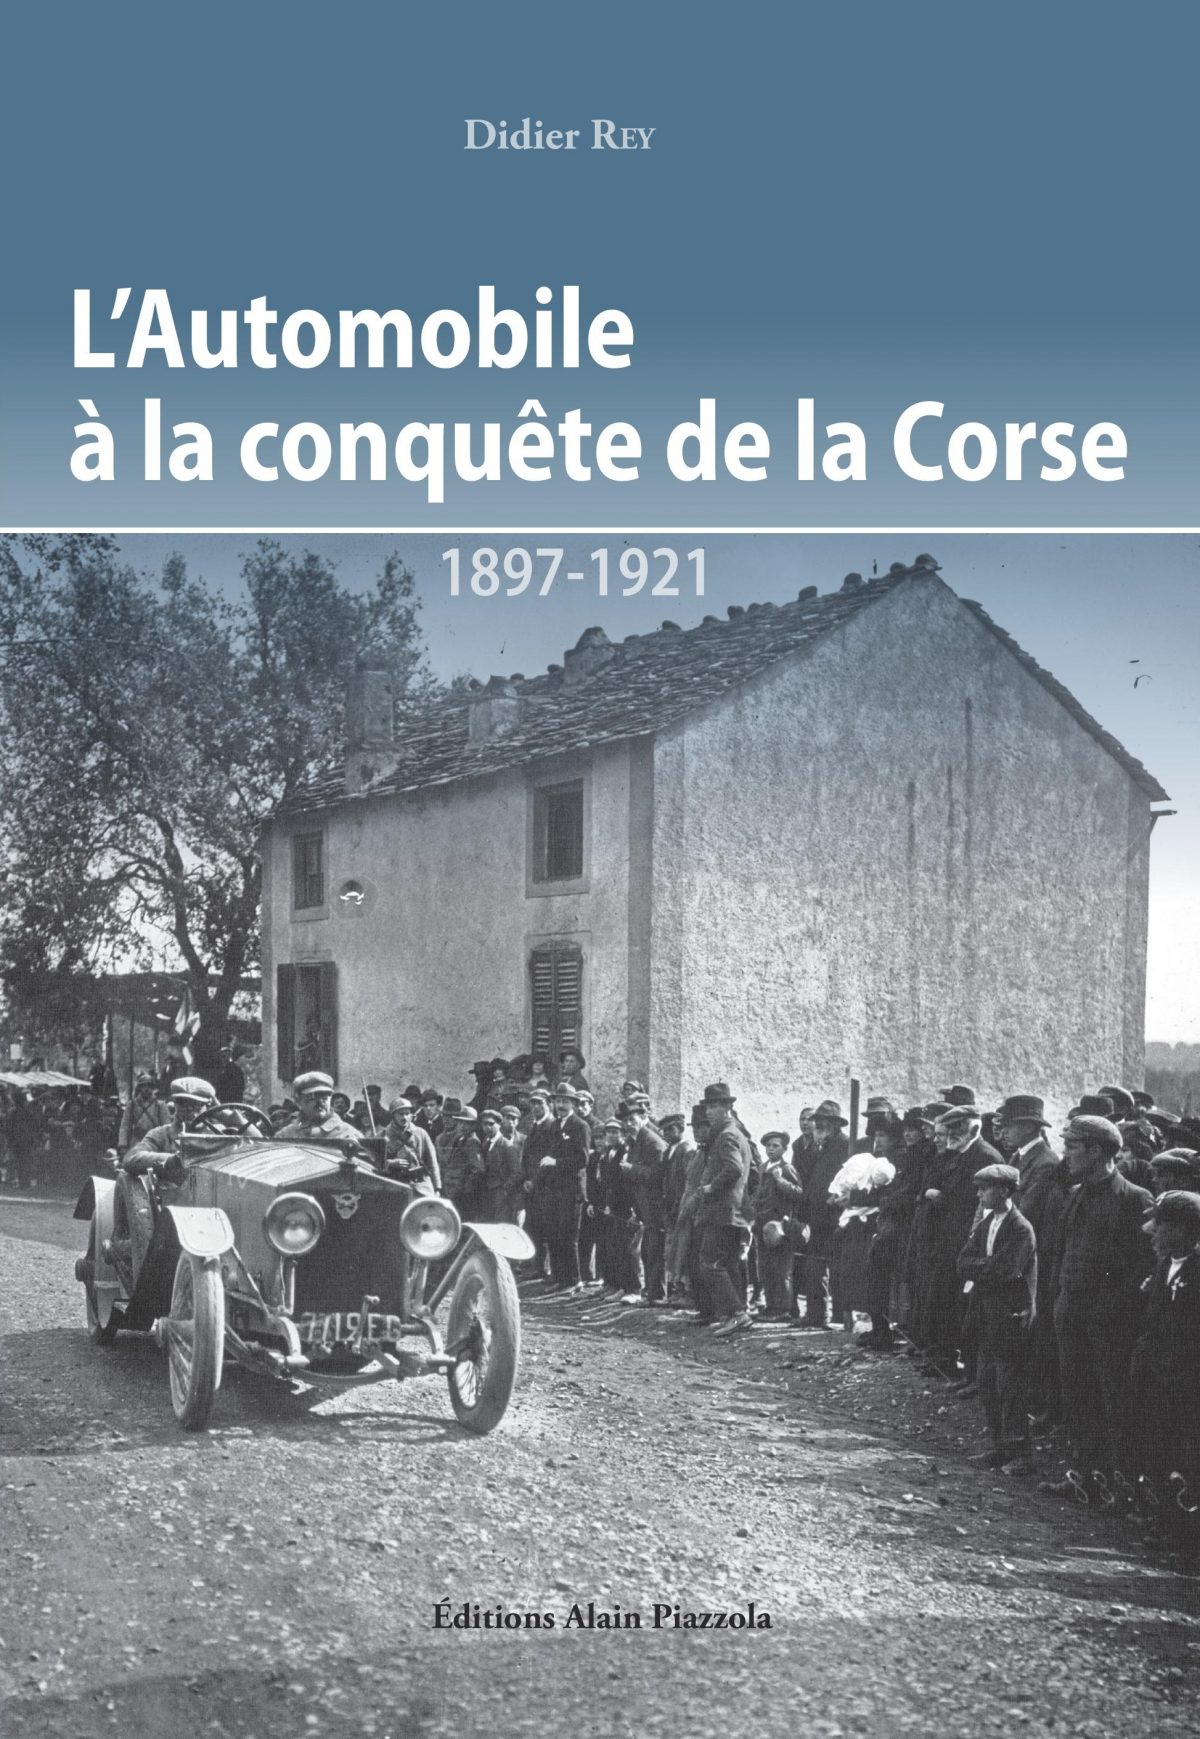 L’Automobile à la conquête de la Corse (1897-1921), Ajaccio : Editions Alain Piazzola, 2016.